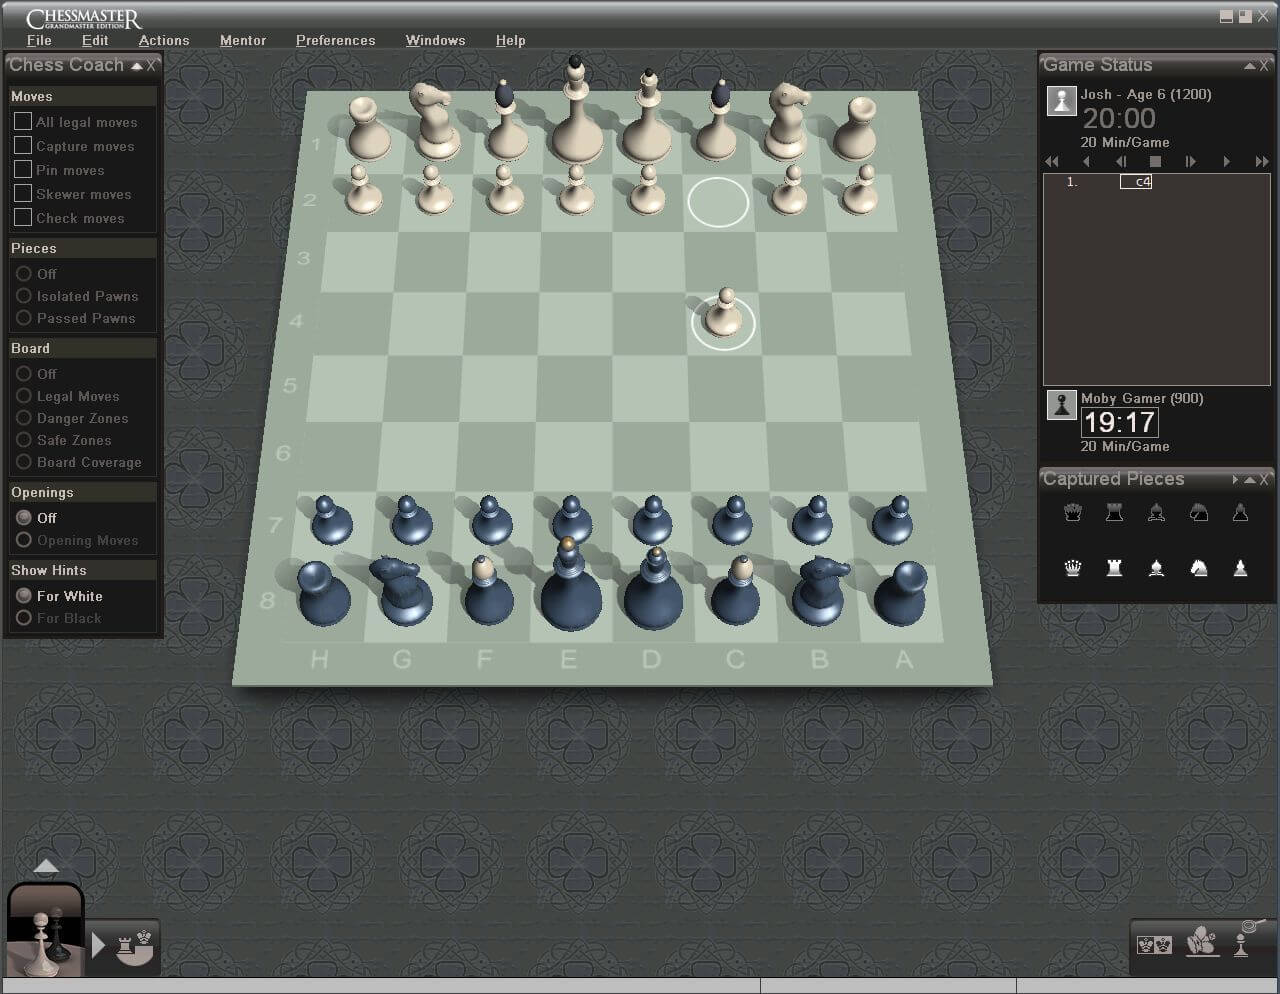 Chessmaster: Grandmaster Edition - Download Free Full Games